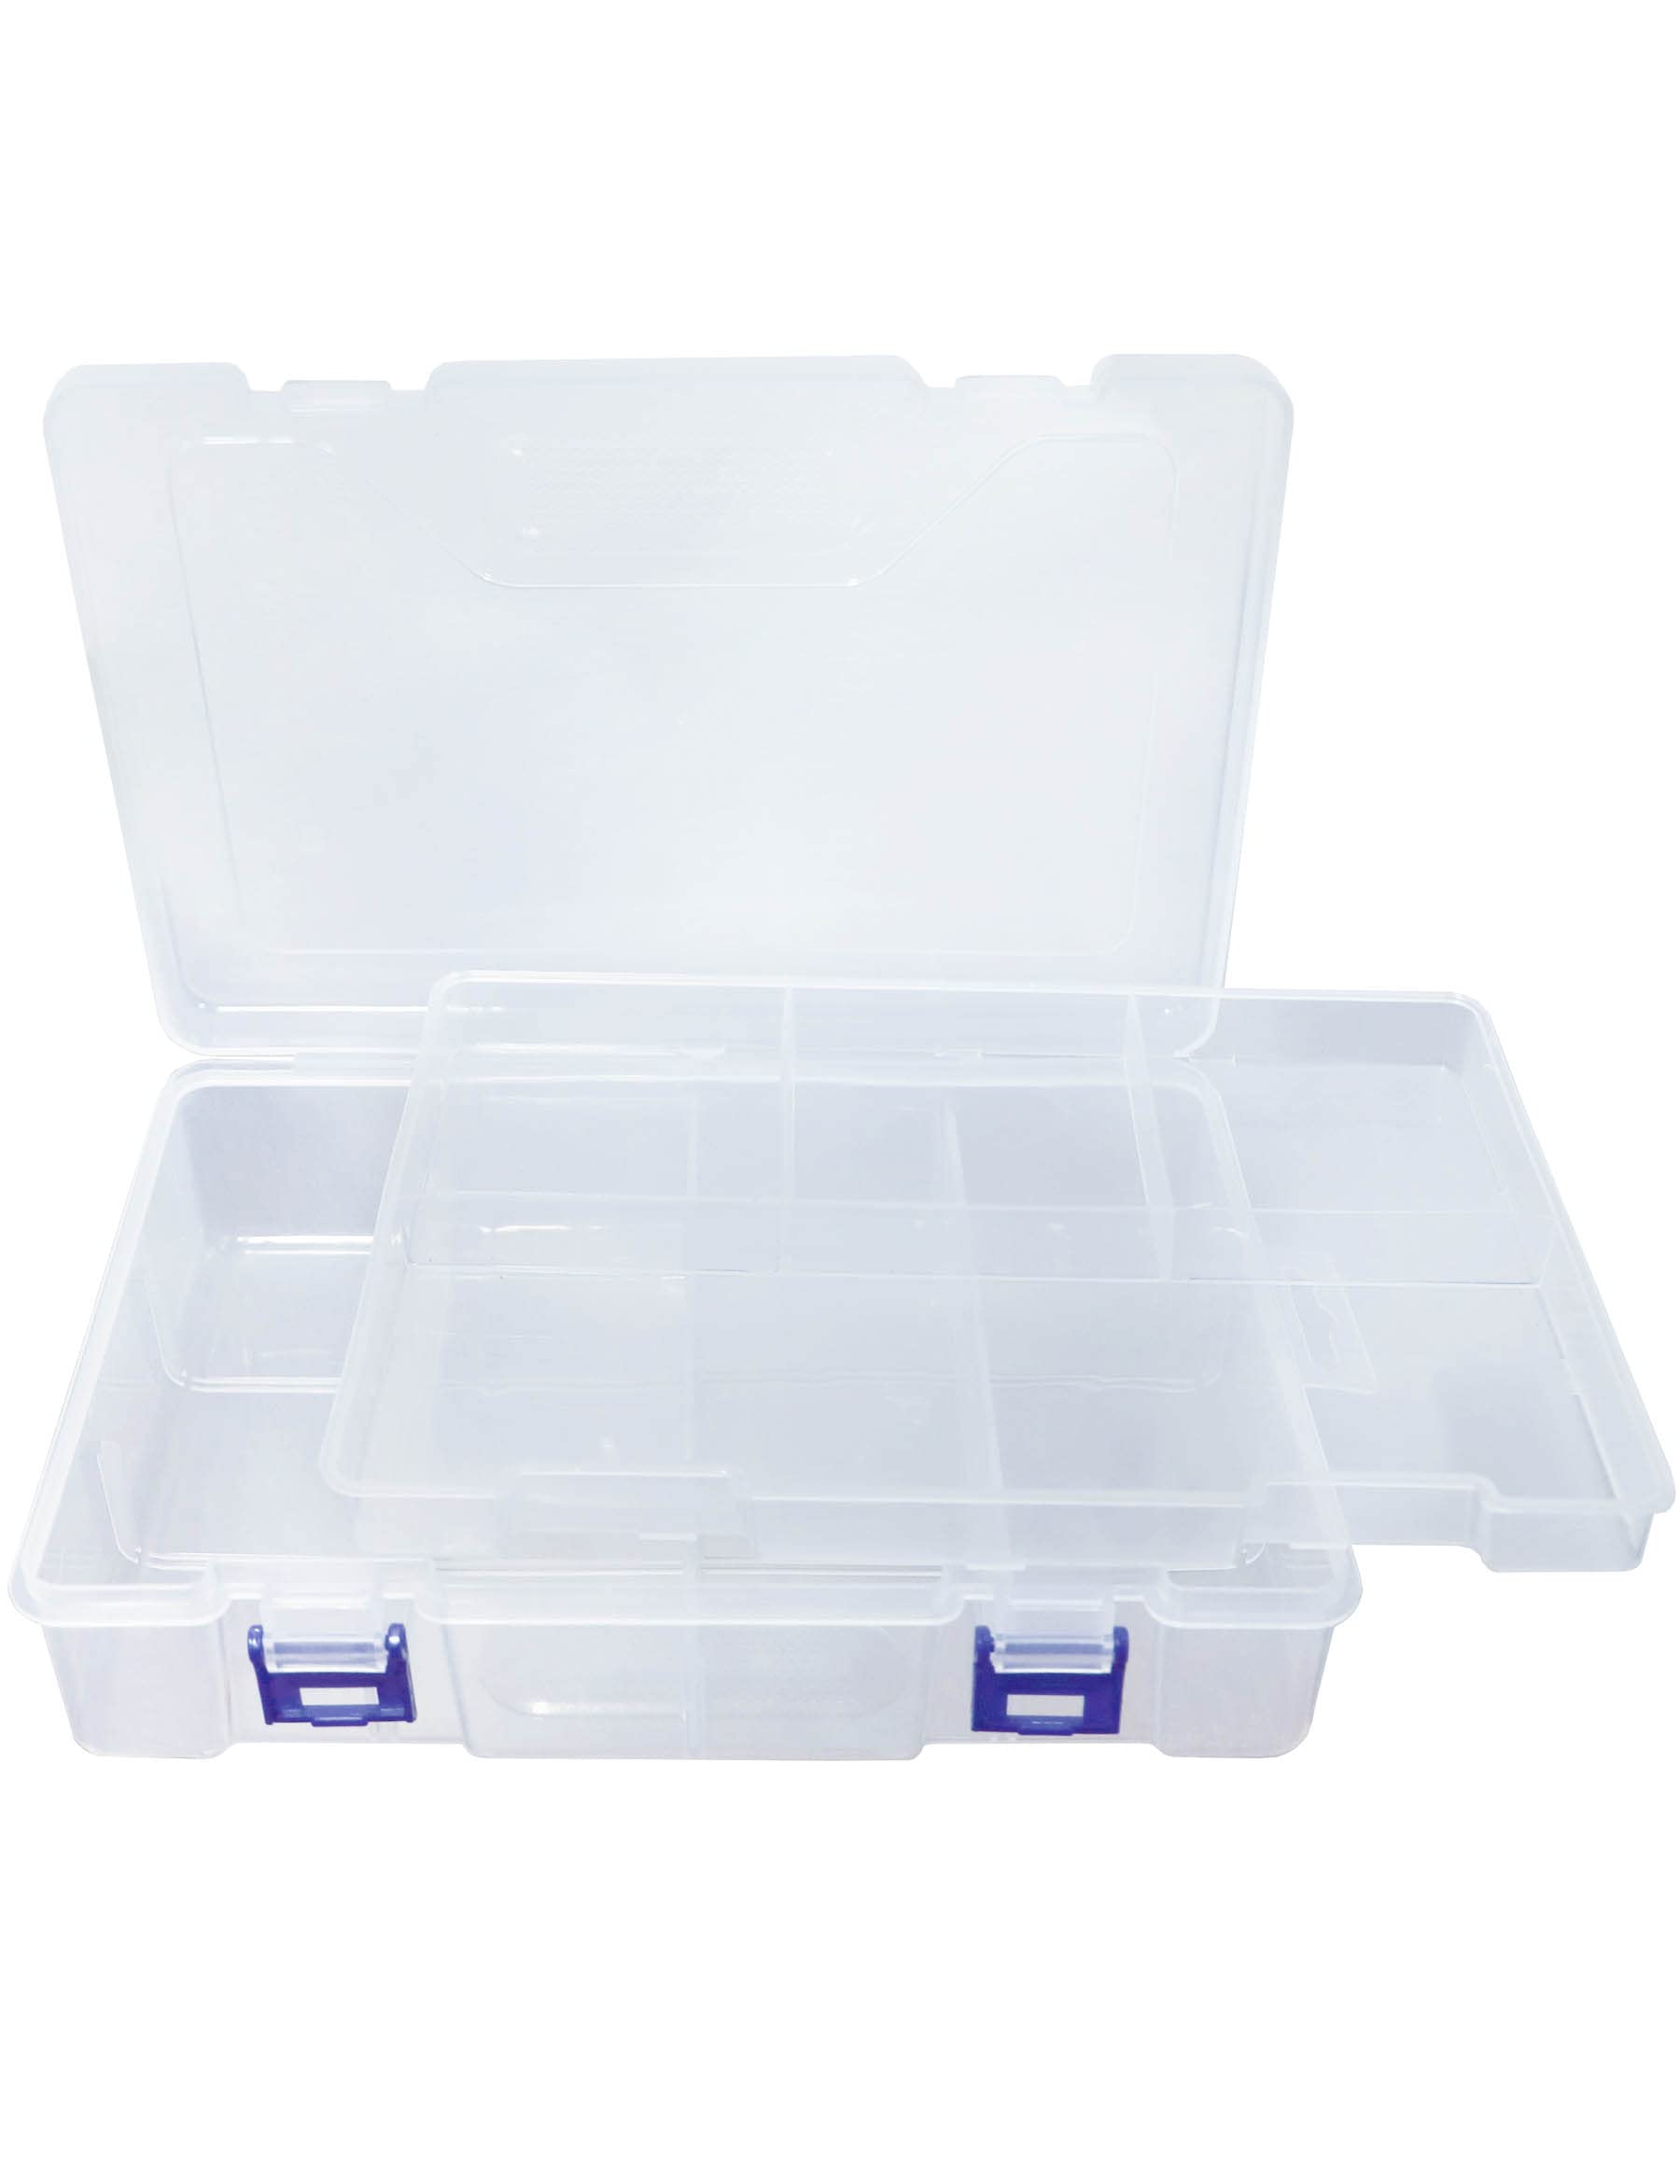 Avlcoaky Tackle Box Fishing Tackle Box Organizer with Movable Tray, Plastic  Waterproof Fishing Box Storage One